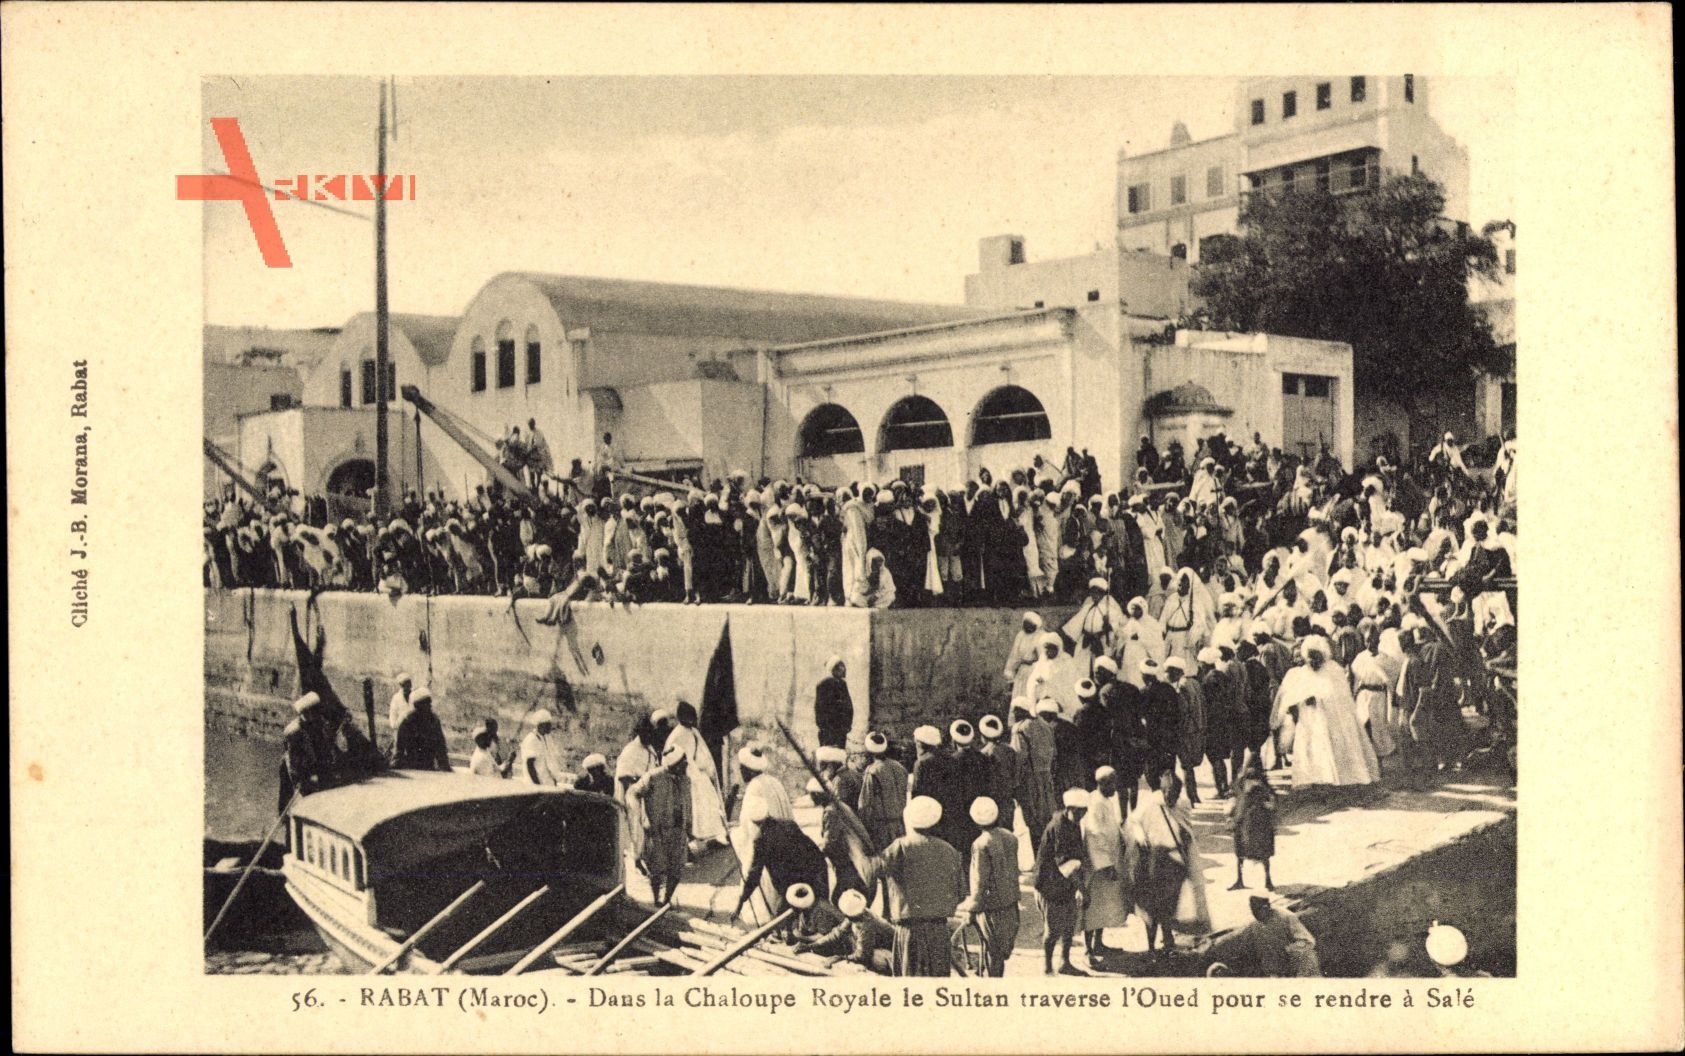 Rabat Marokko, Dans la Chaloupe Royale le sultan traverse lOued